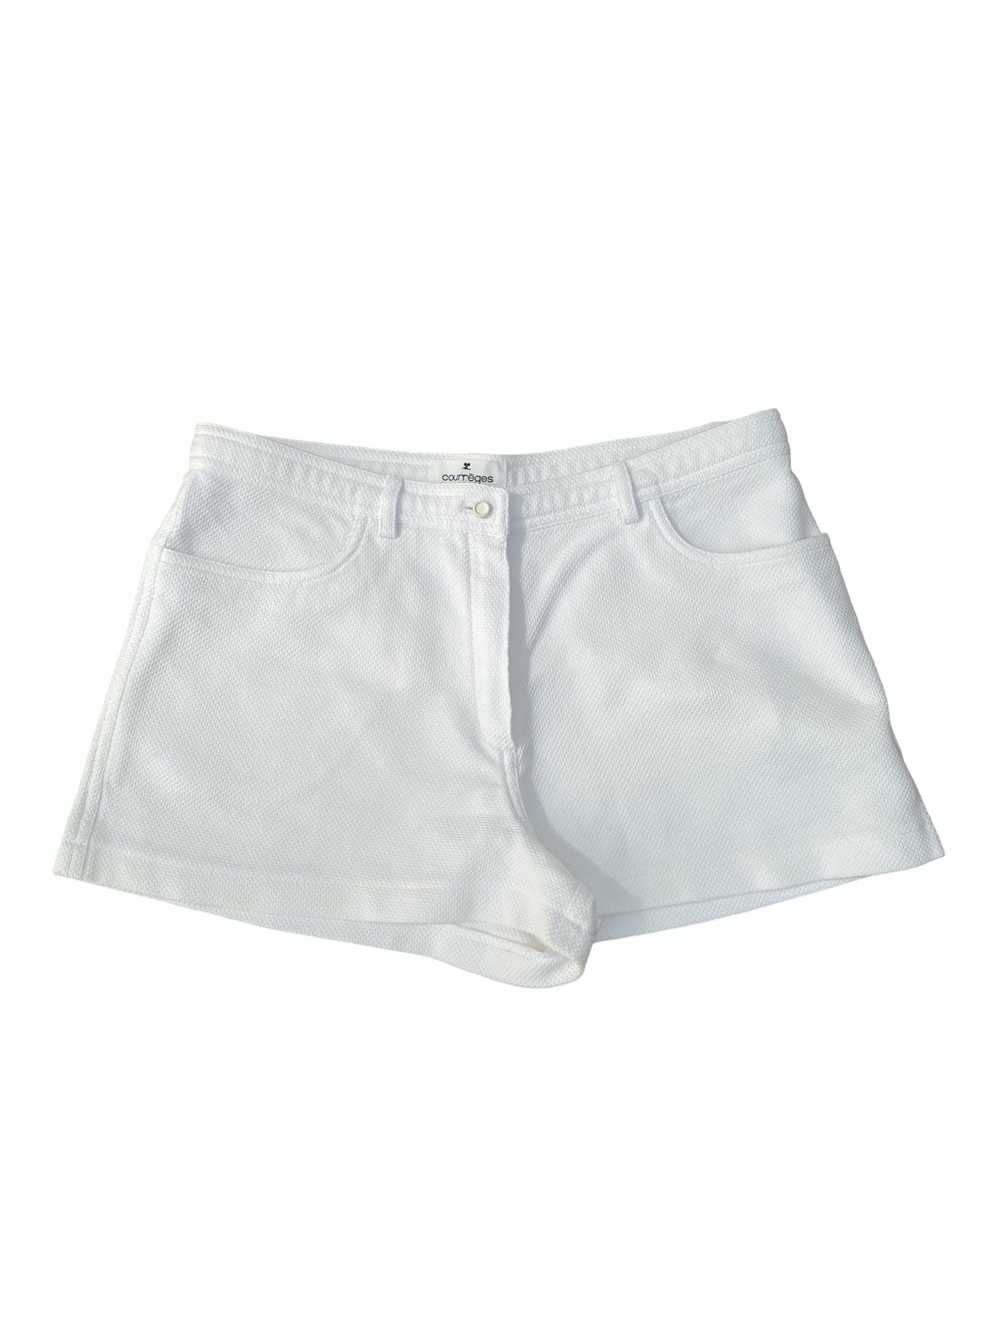 Courreges Vintage Heritage White Cotton Shorts - image 1